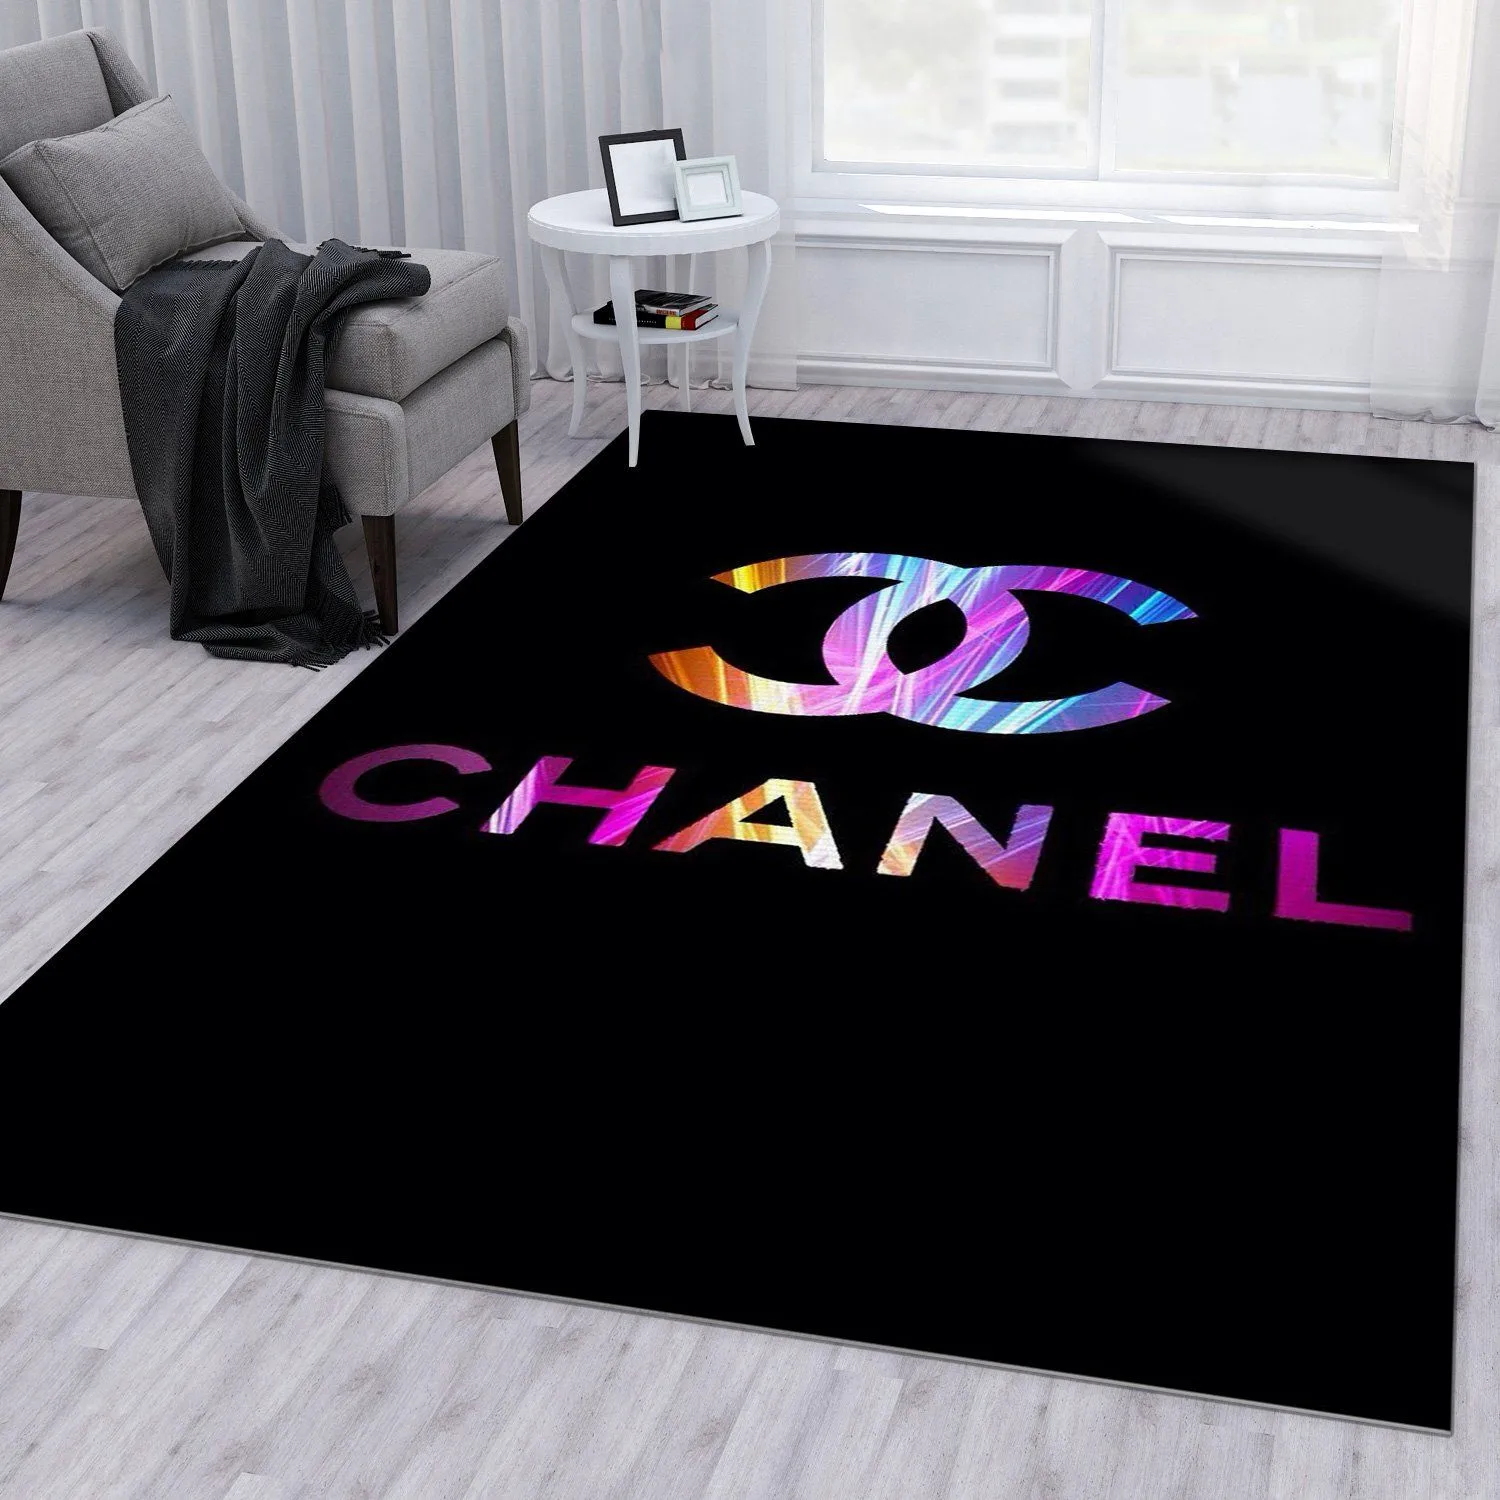 Chanel Rectangle Rug Area Carpet Door Mat Fashion Brand Home Decor Luxury